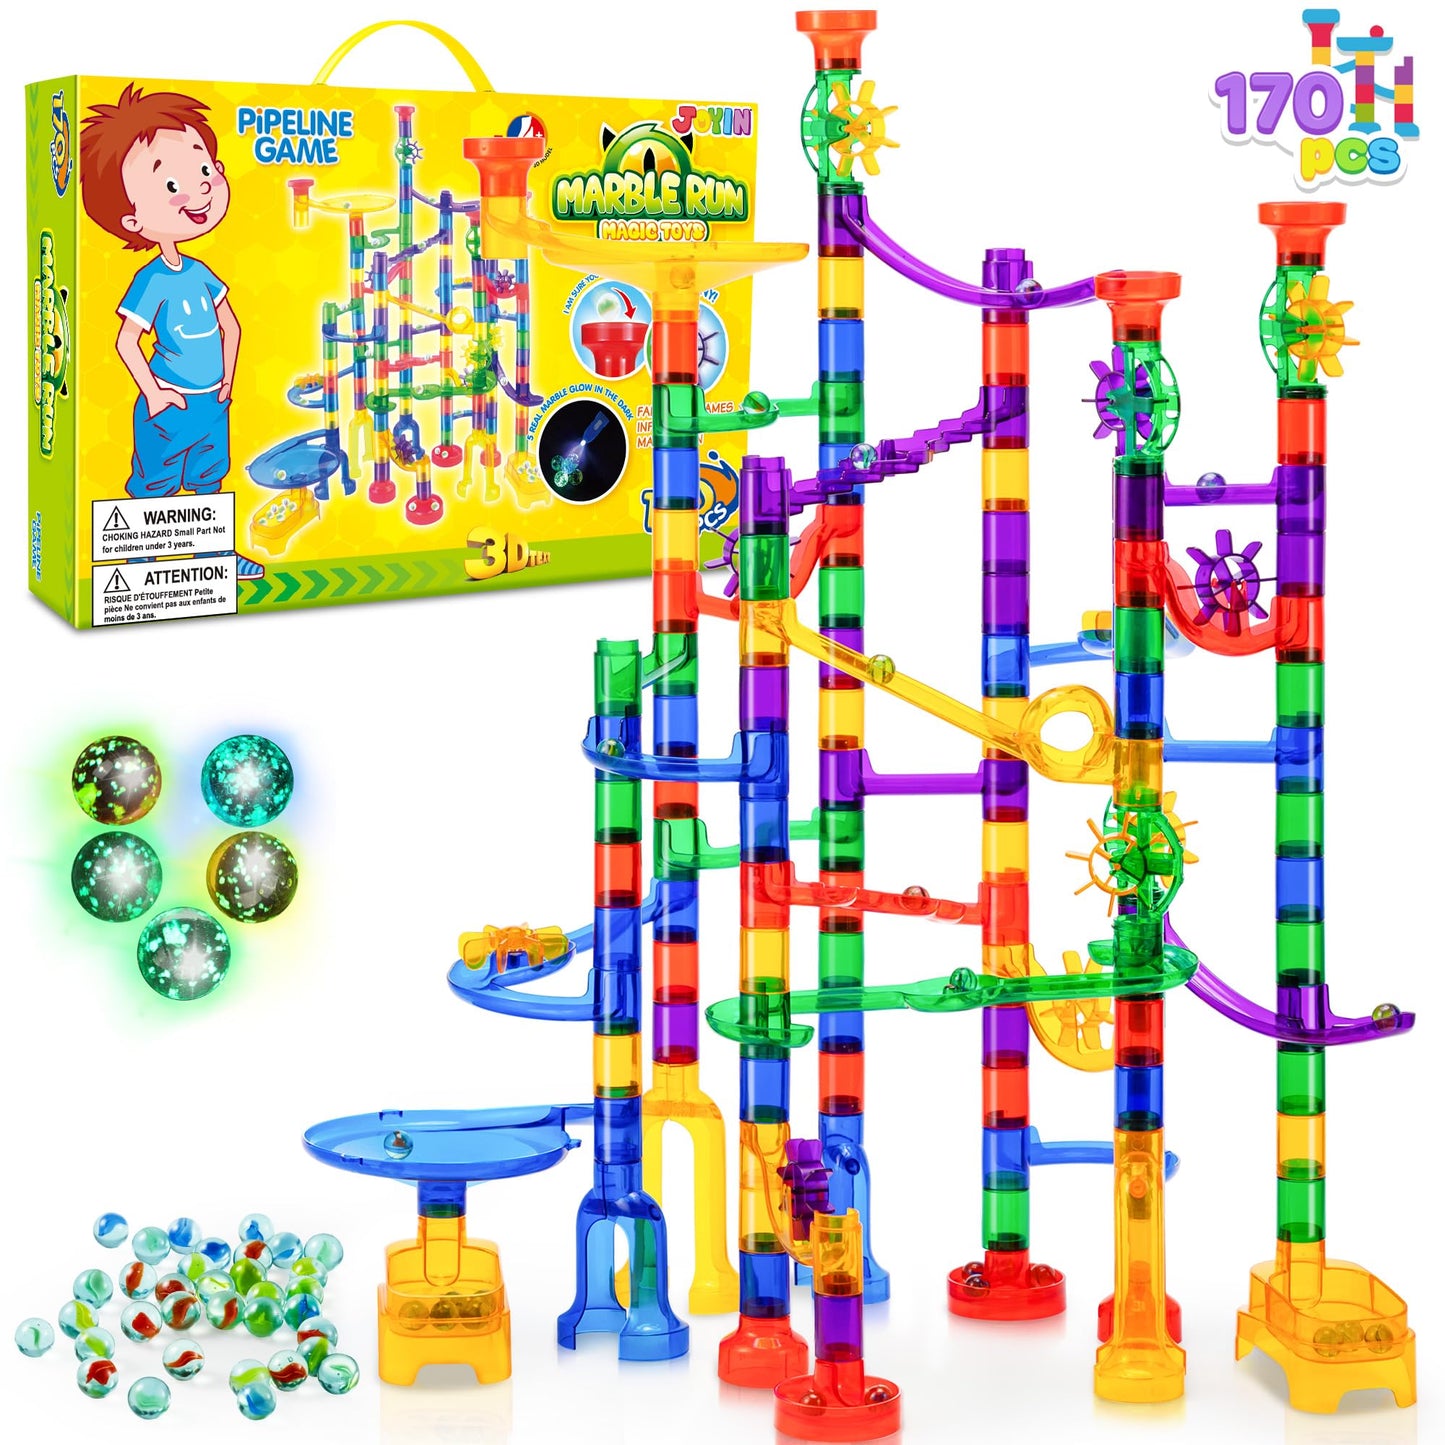 JOYIN 170Pcs Marble Run Premium Toy Set, Construction Building Blocks Toys, STEM Educational Building Block Toy(120 Plastic Pieces + 50 Glass